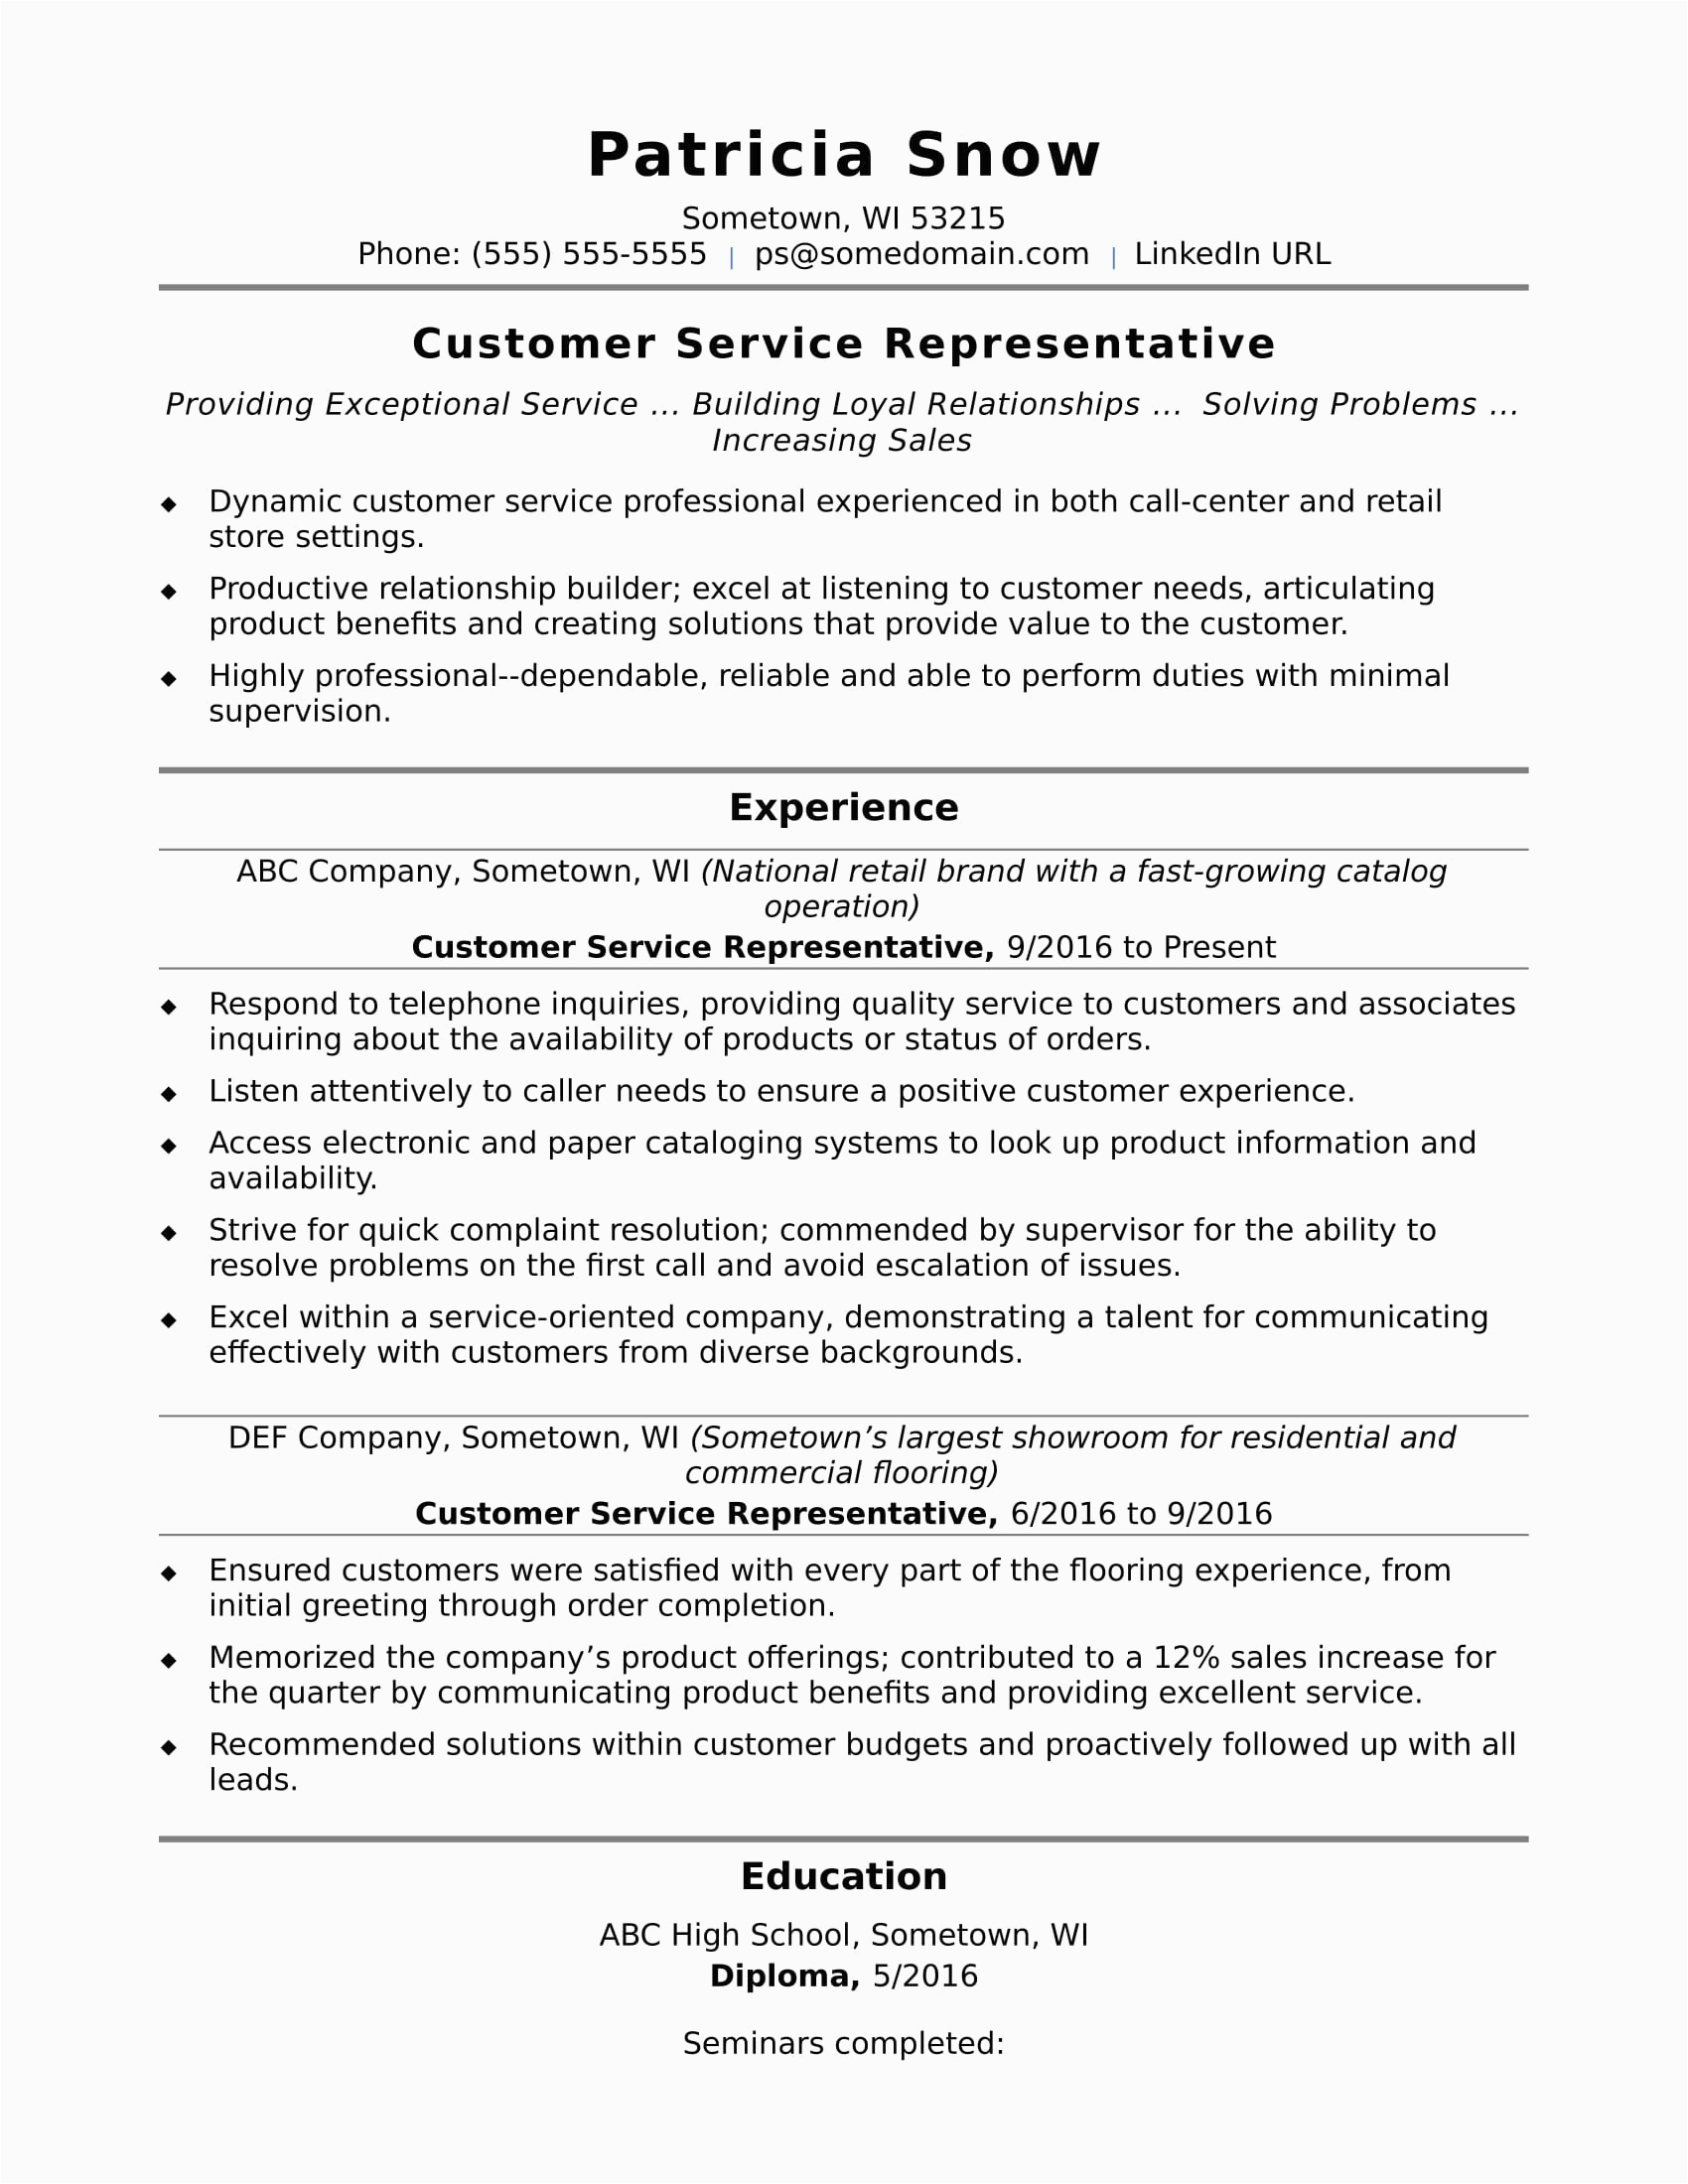 Customer Service Professional Summary Resume Sample Customer Service Representative Resume Sample